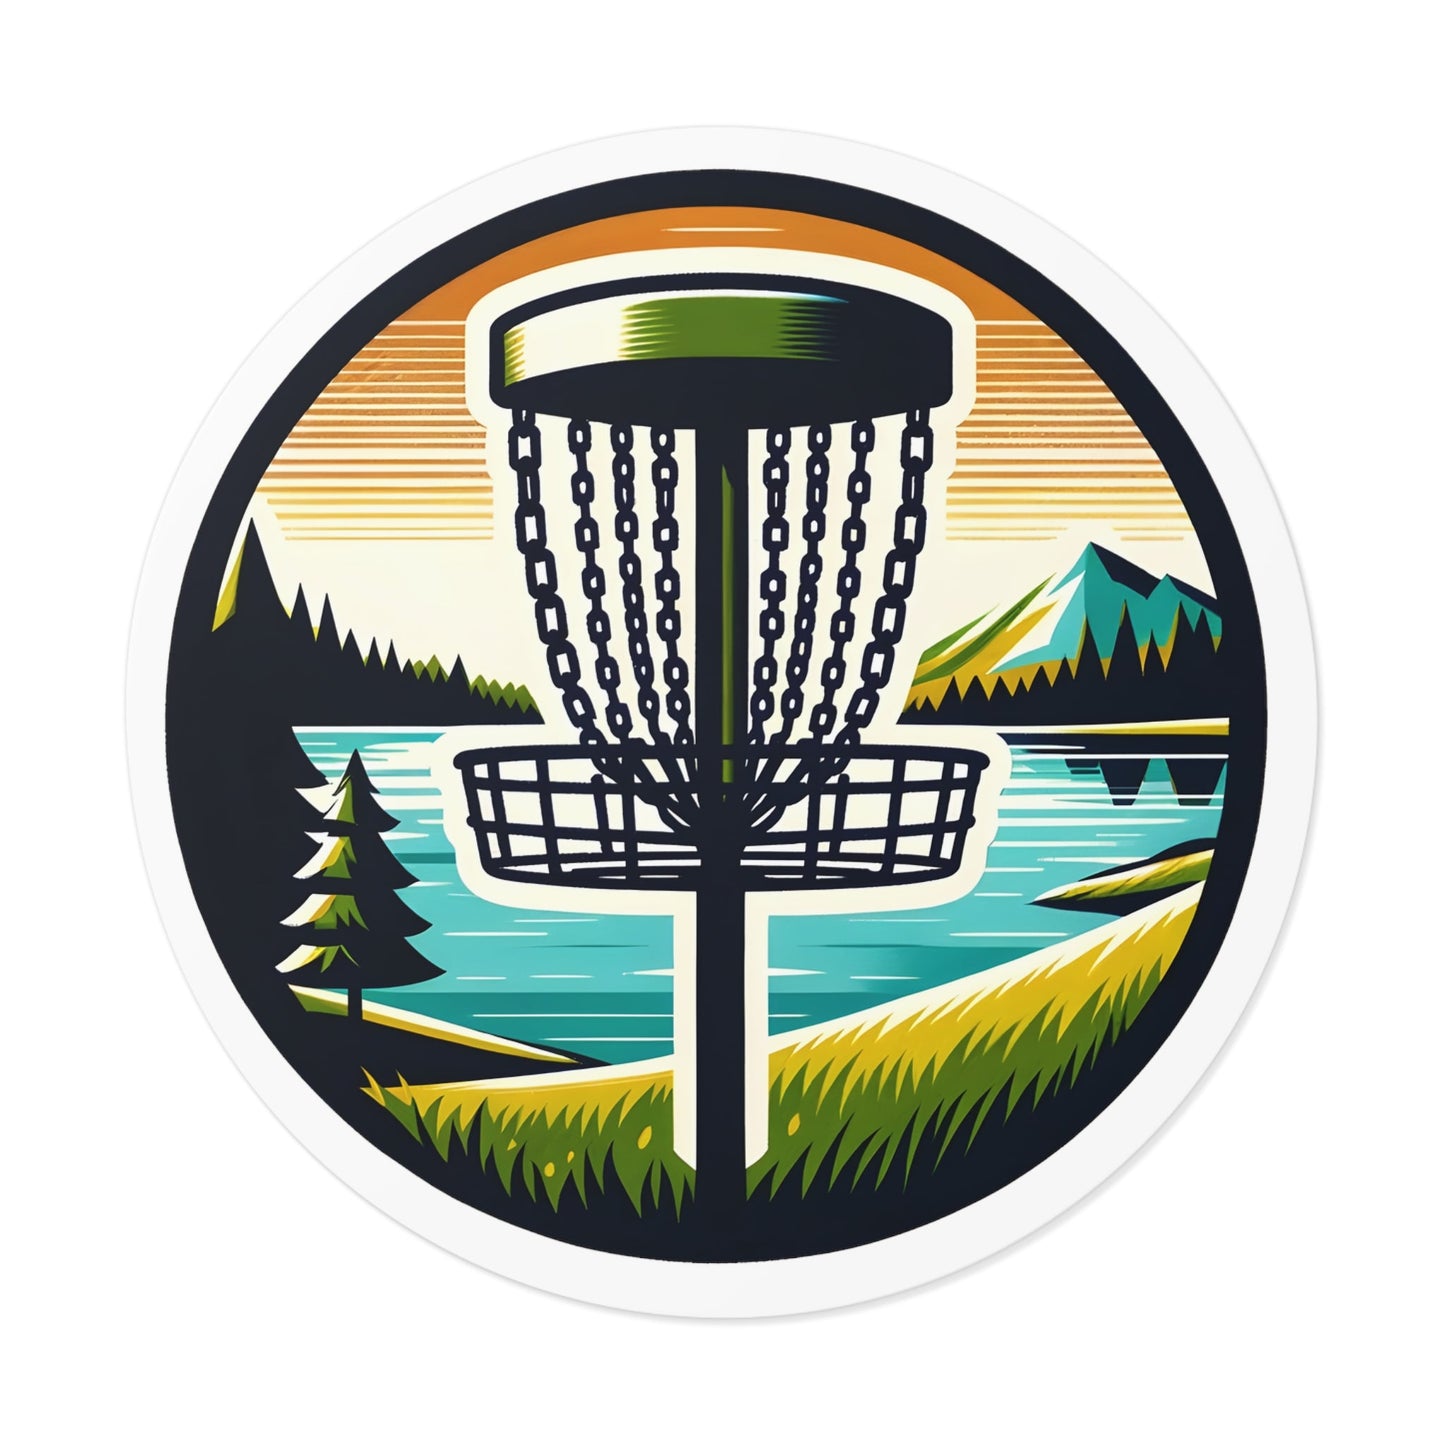 Disc Golf Basket by Lake Vintage Sticker - Round Vinyl Stickers - Quirky Goodies